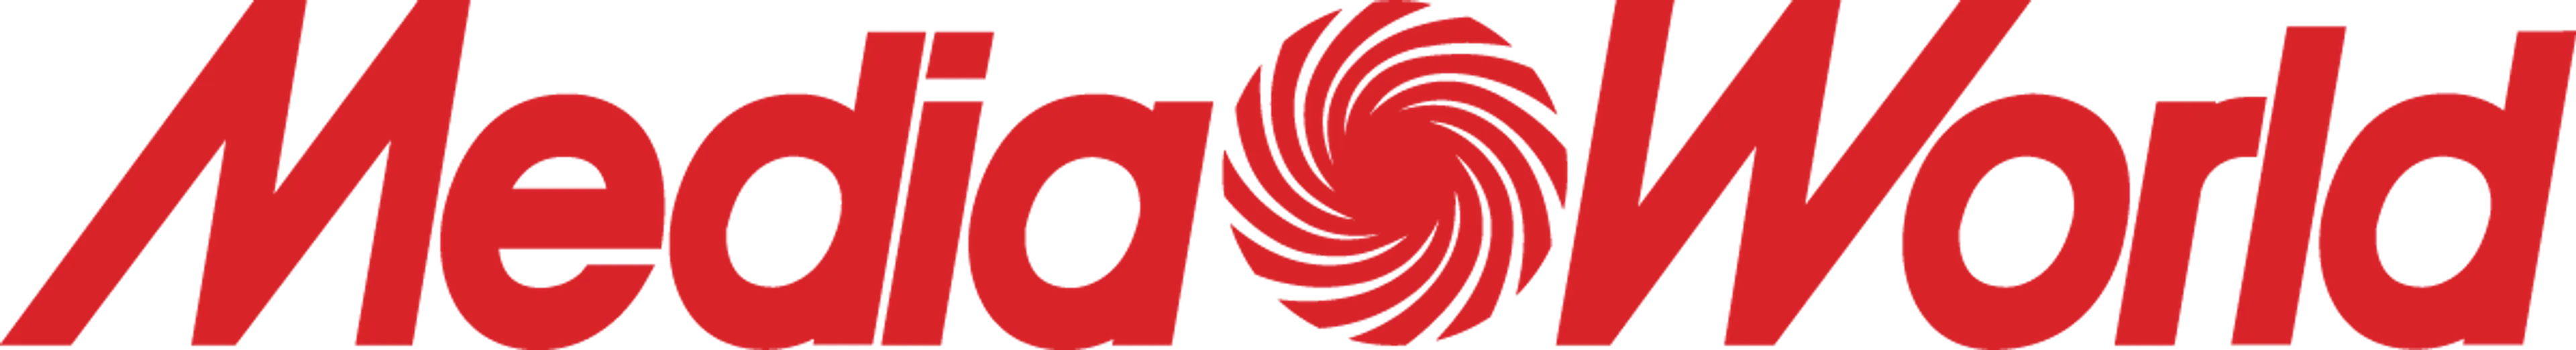 MEDIAWORLD logo